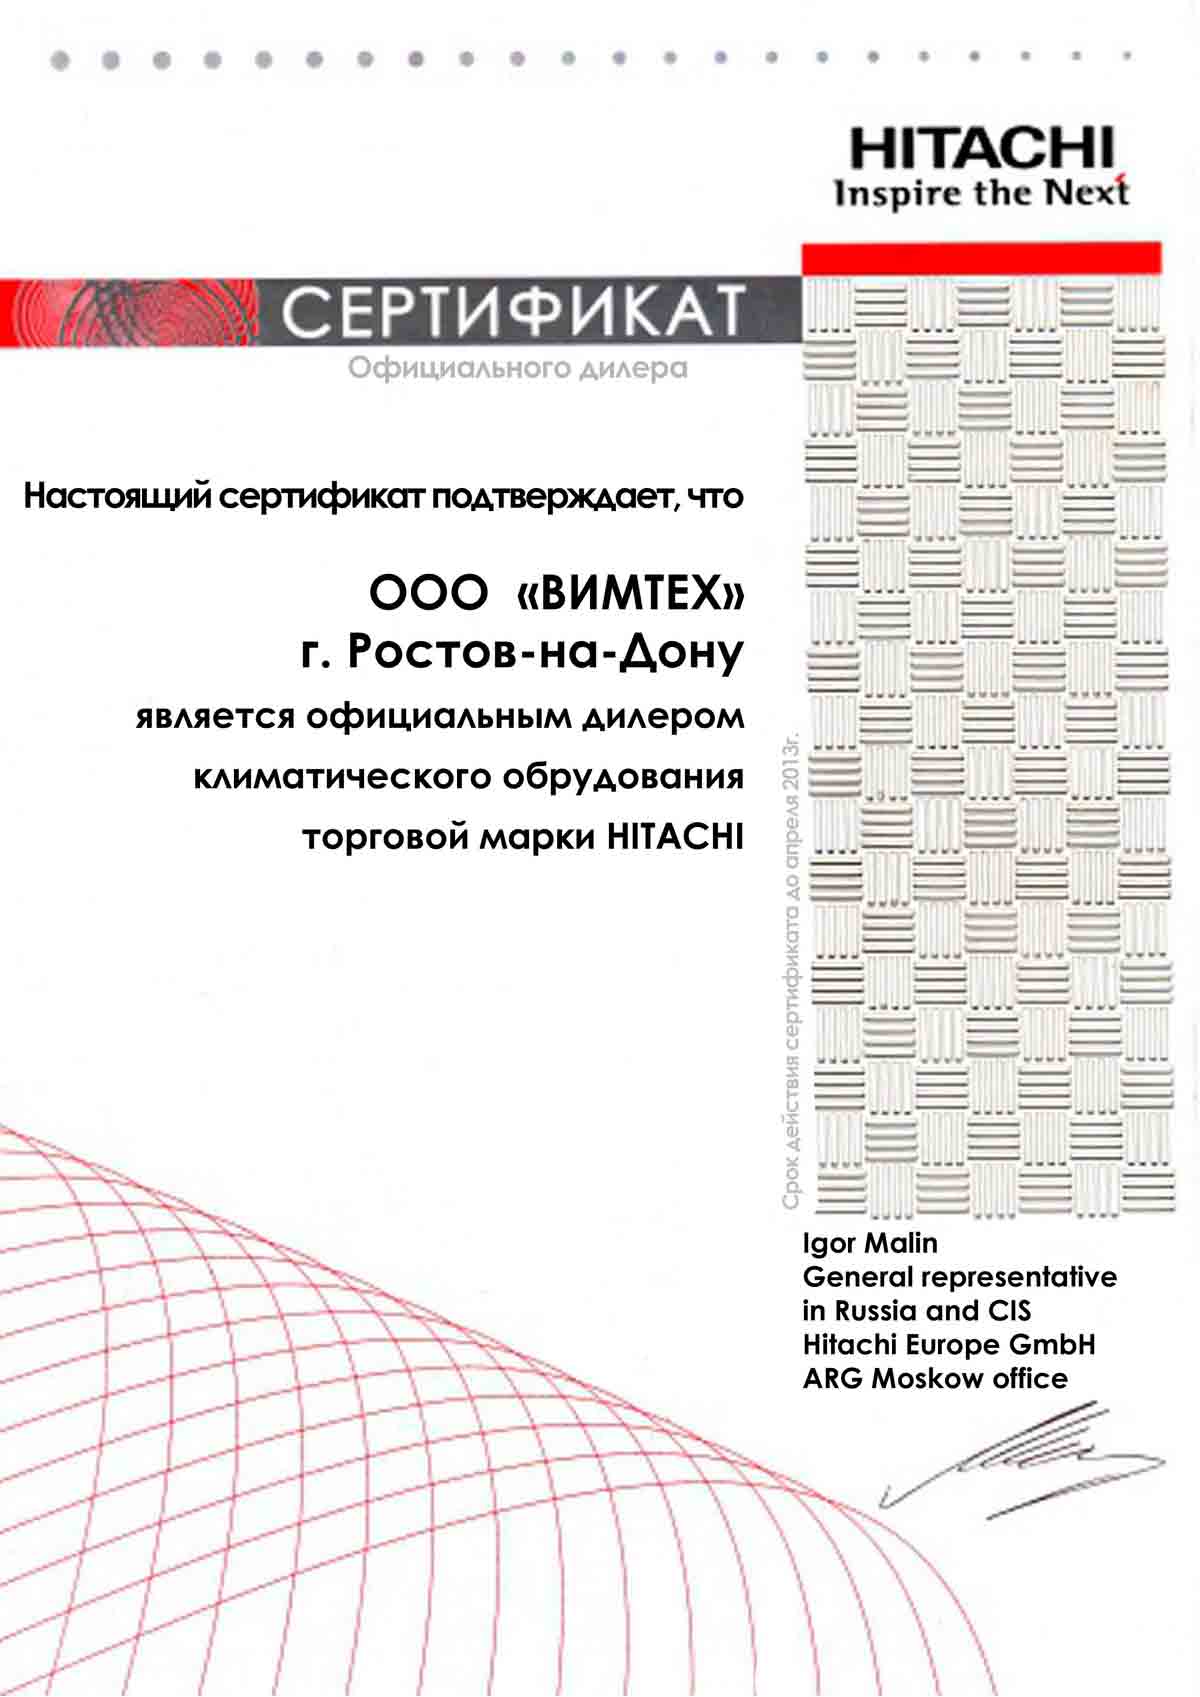 Hitachi сертификат дилера "вимтех"